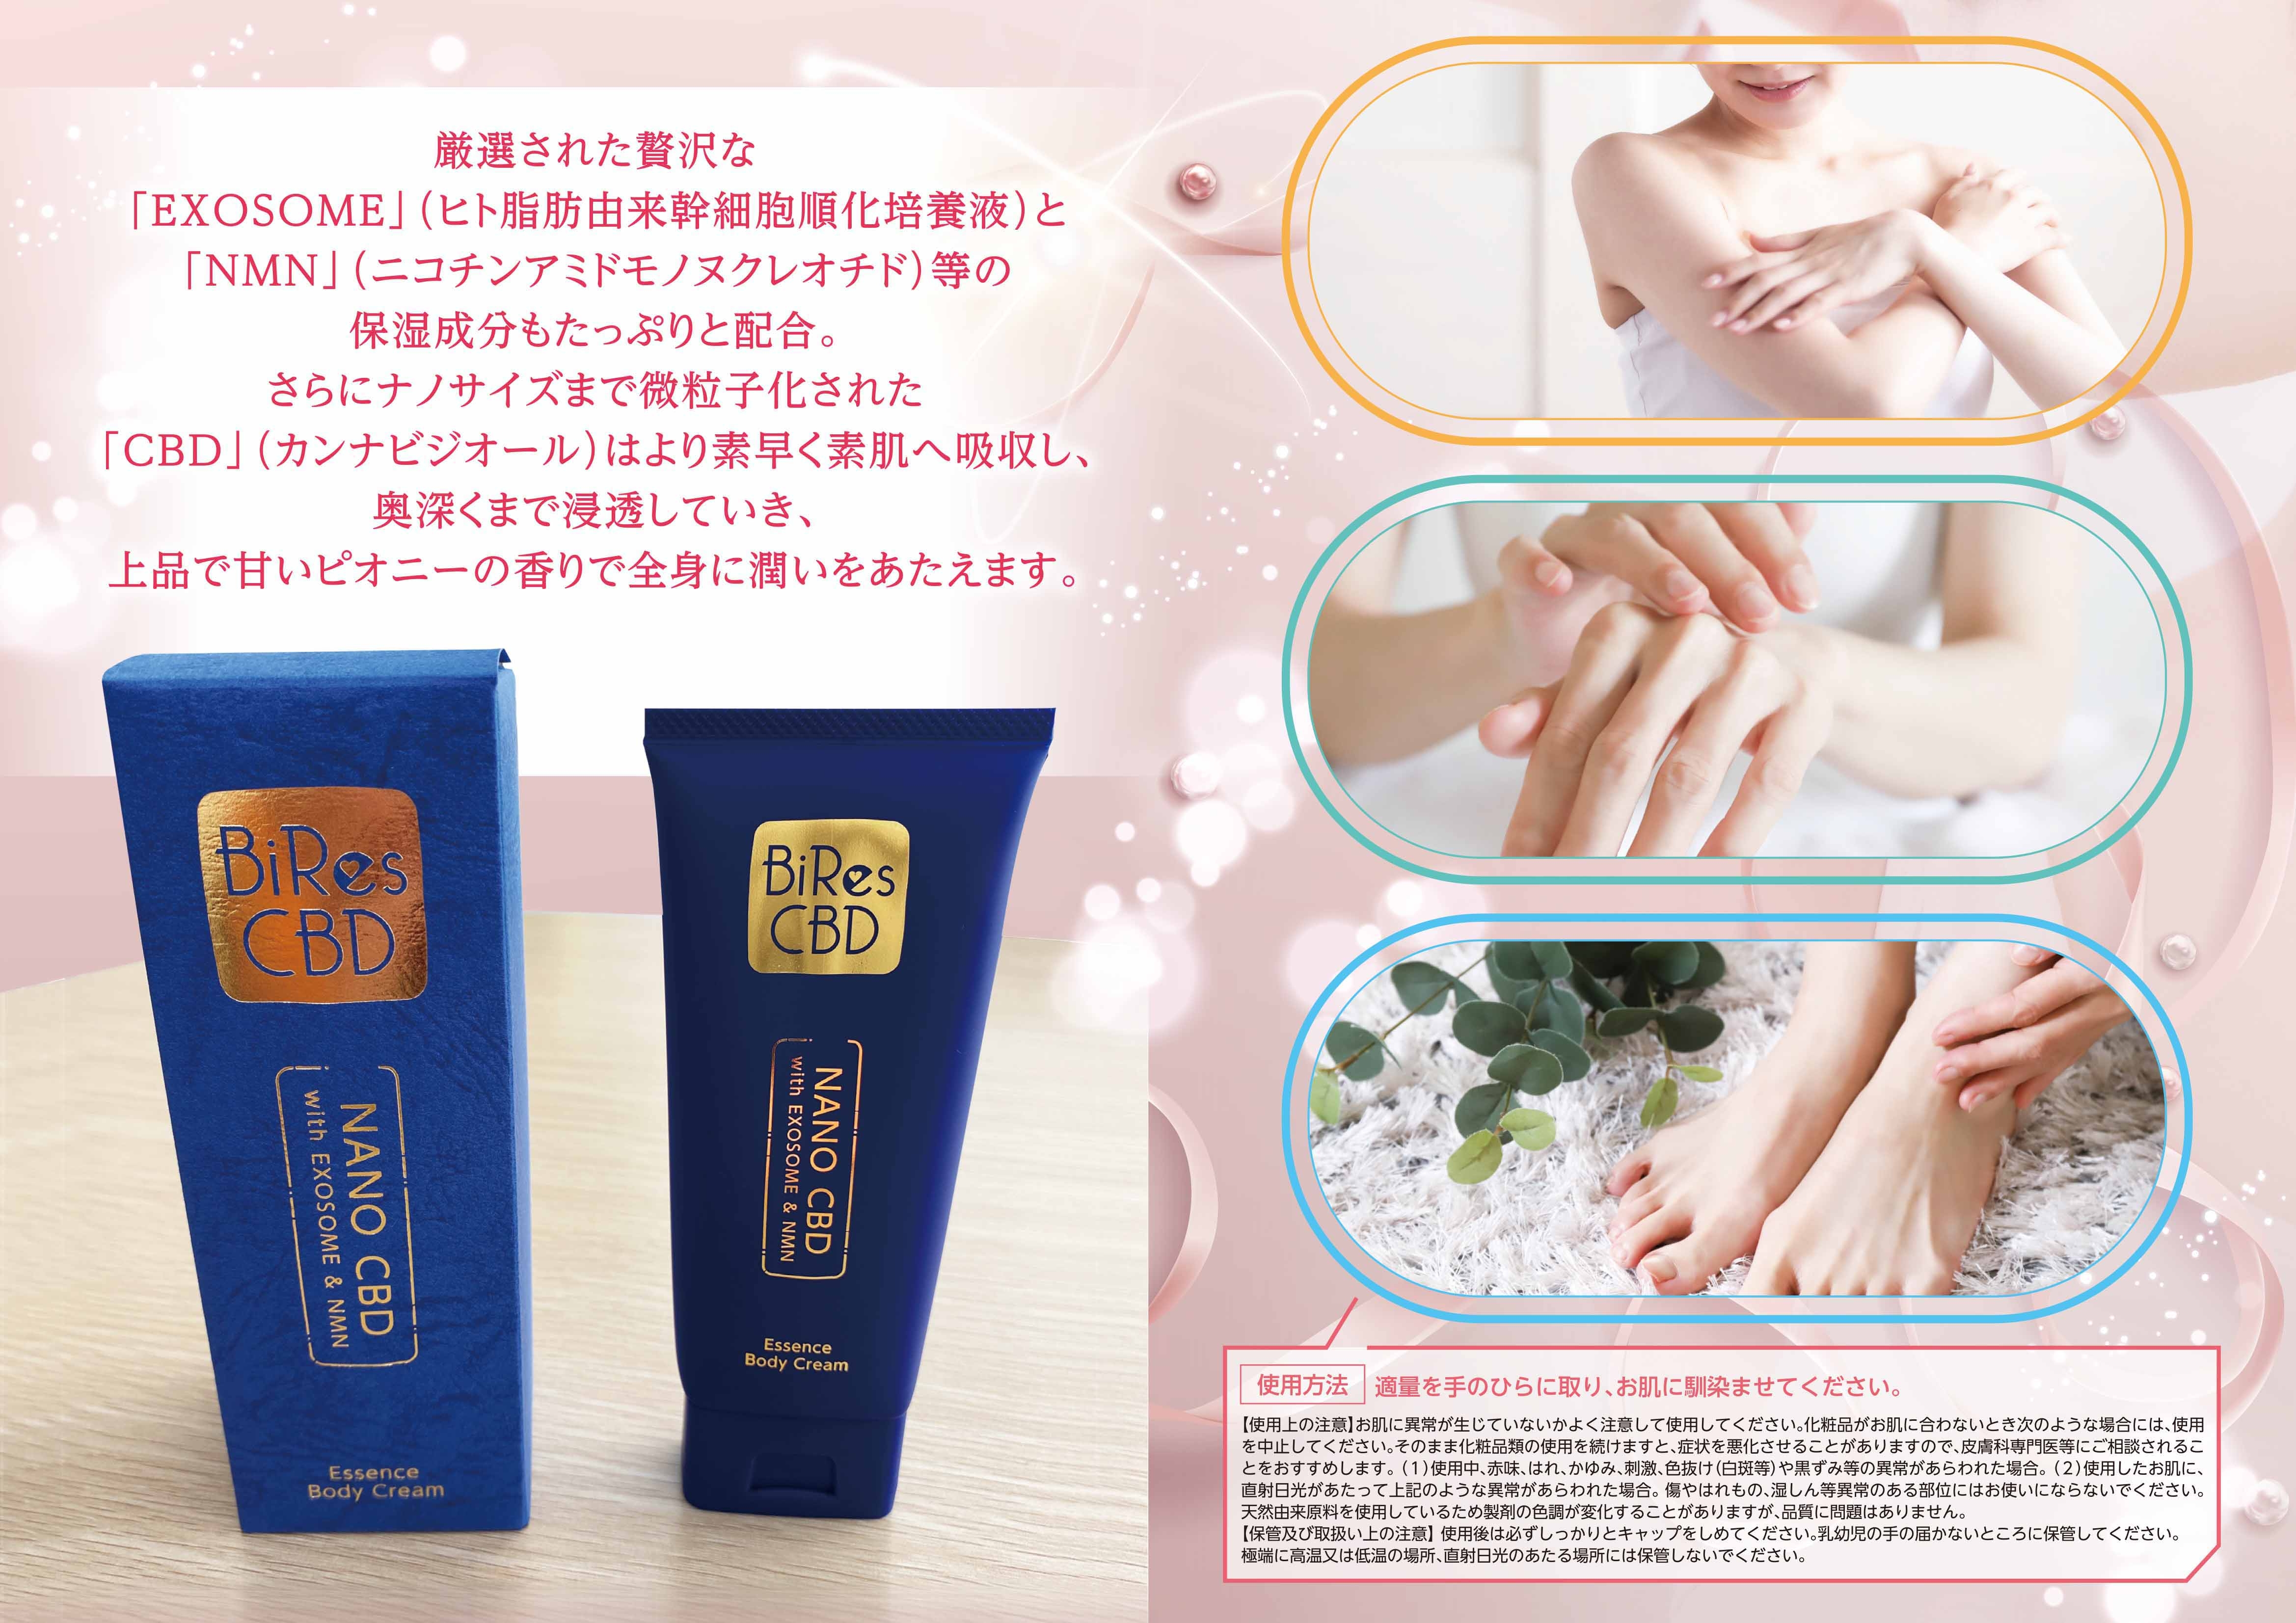 Bires CBD】NANO CBD with EXOSOME&NMN Essence Body Cream | Giftpad ...